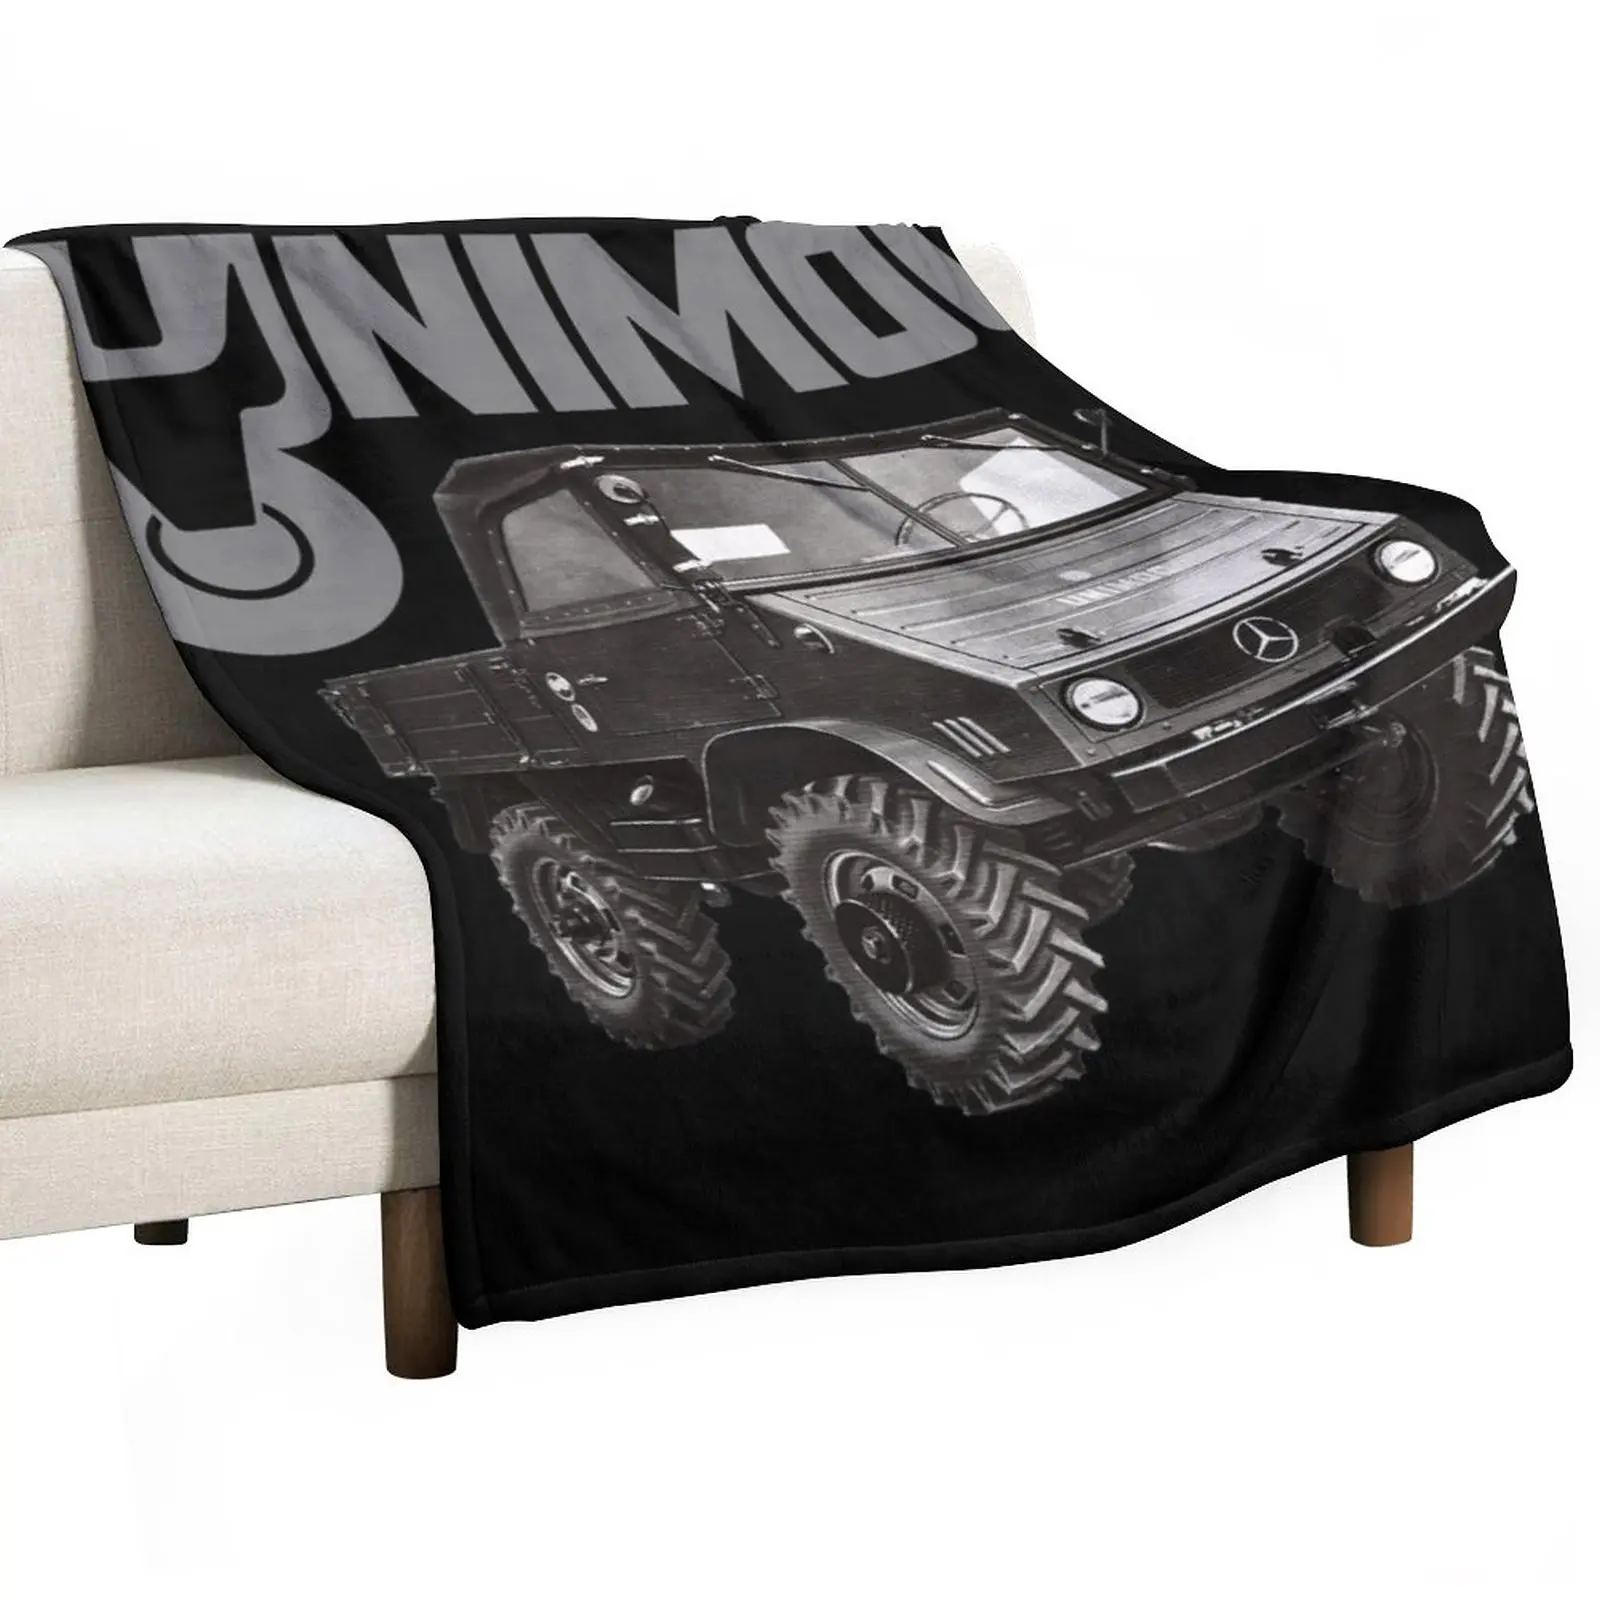 

UNIMOG oldschool (on black) Throw Blanket Large Blanket Warm Blanket Sofa Blanket Luxury St Blanket